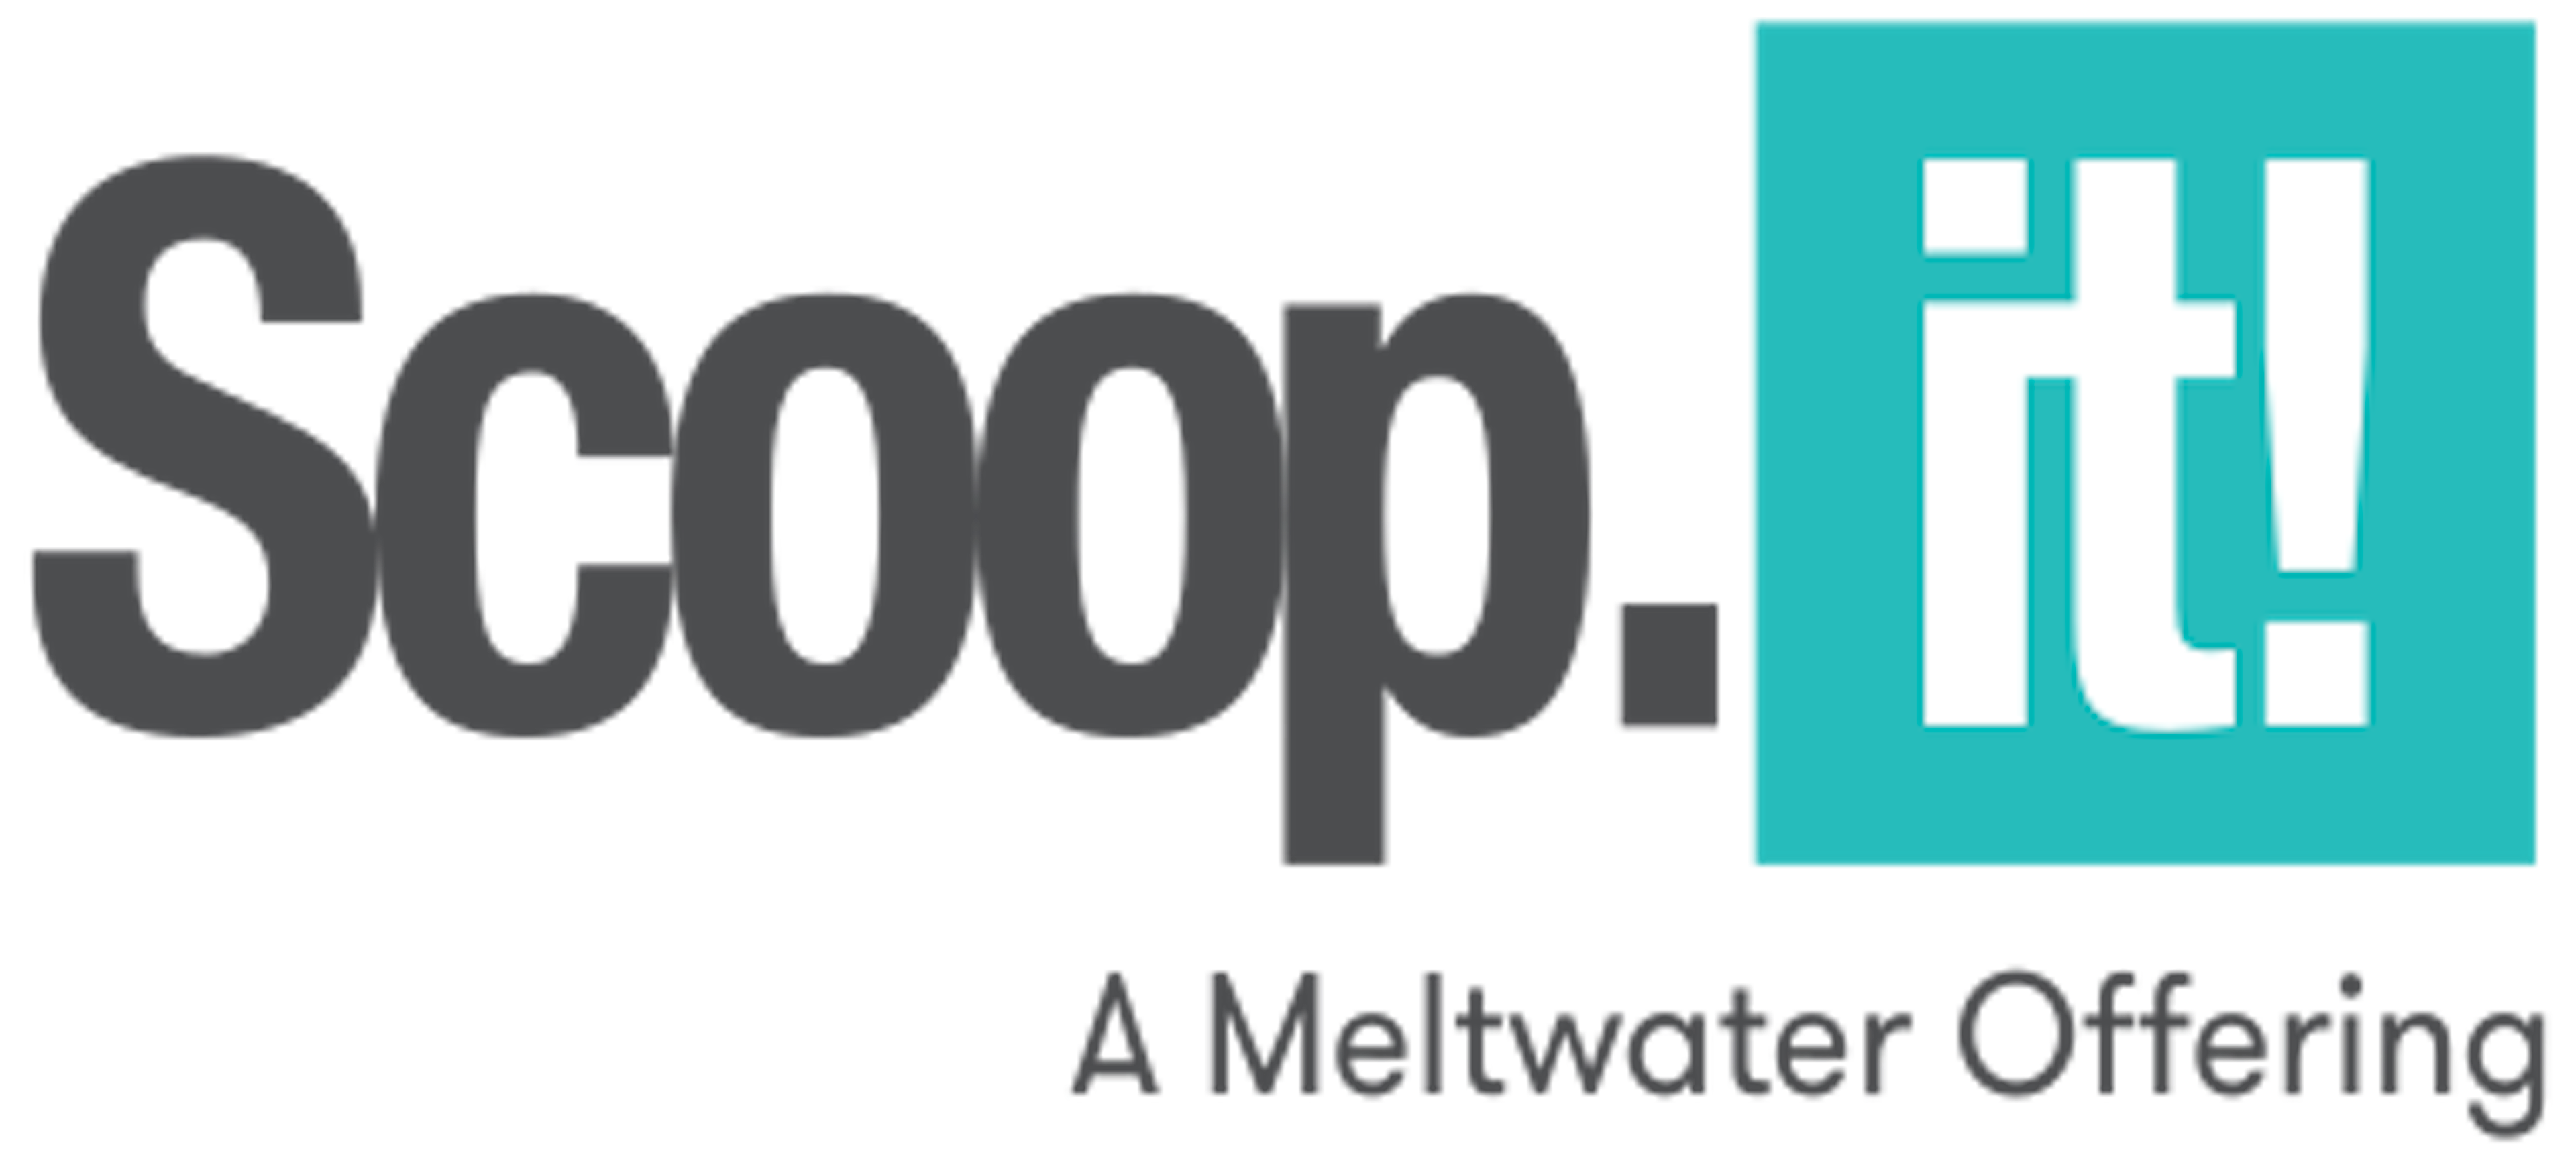 Scoop.it Logo